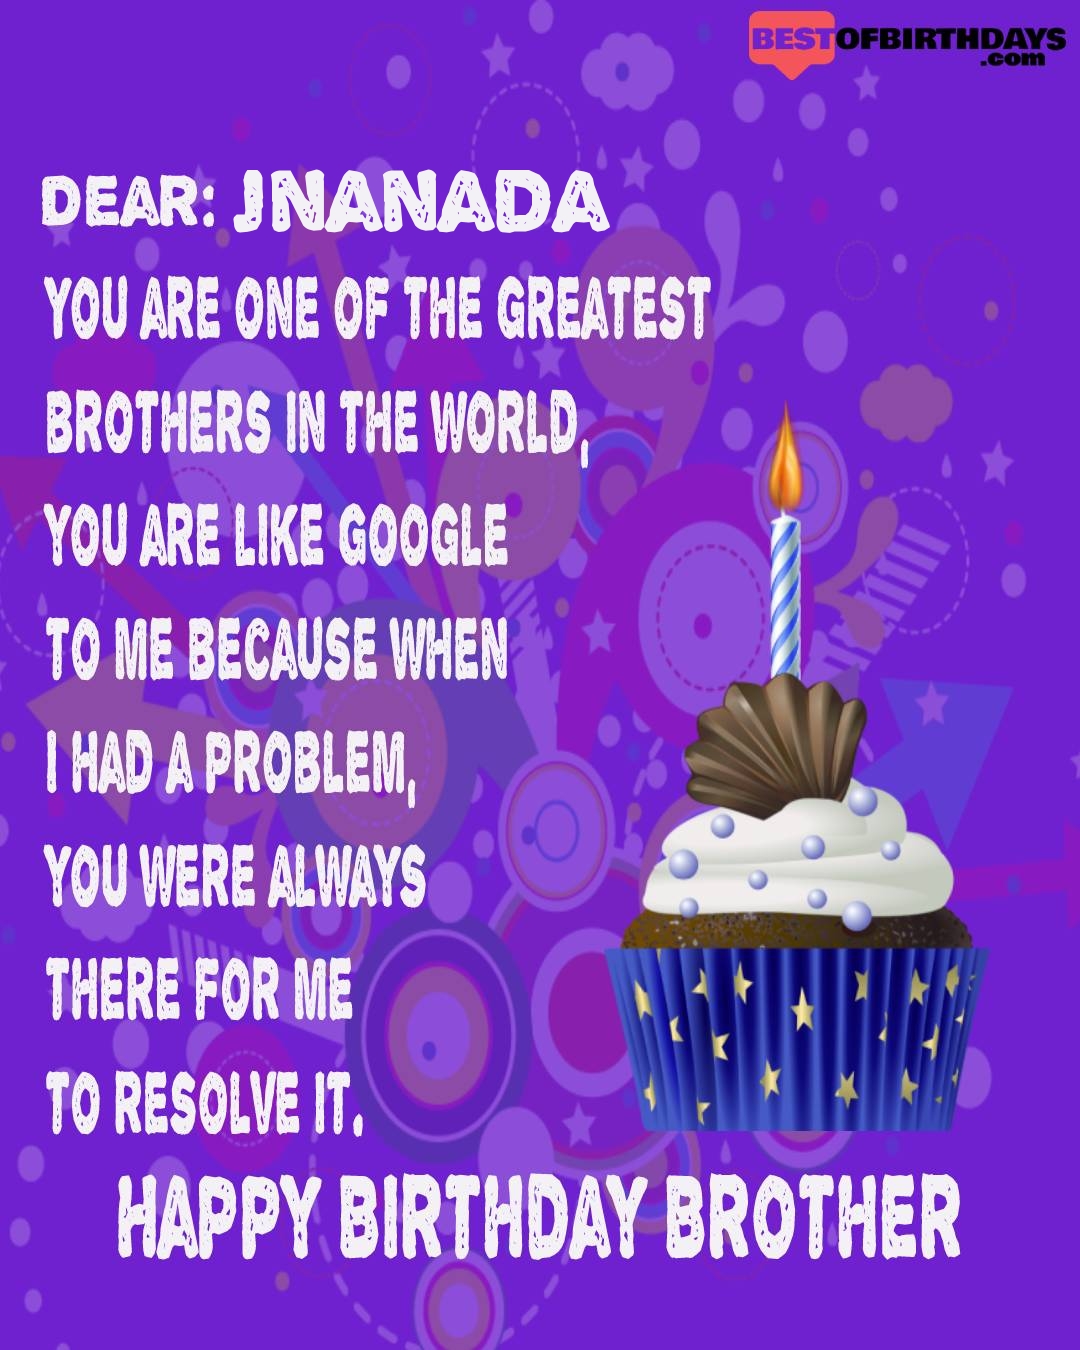 Happy birthday jnanada bhai brother bro